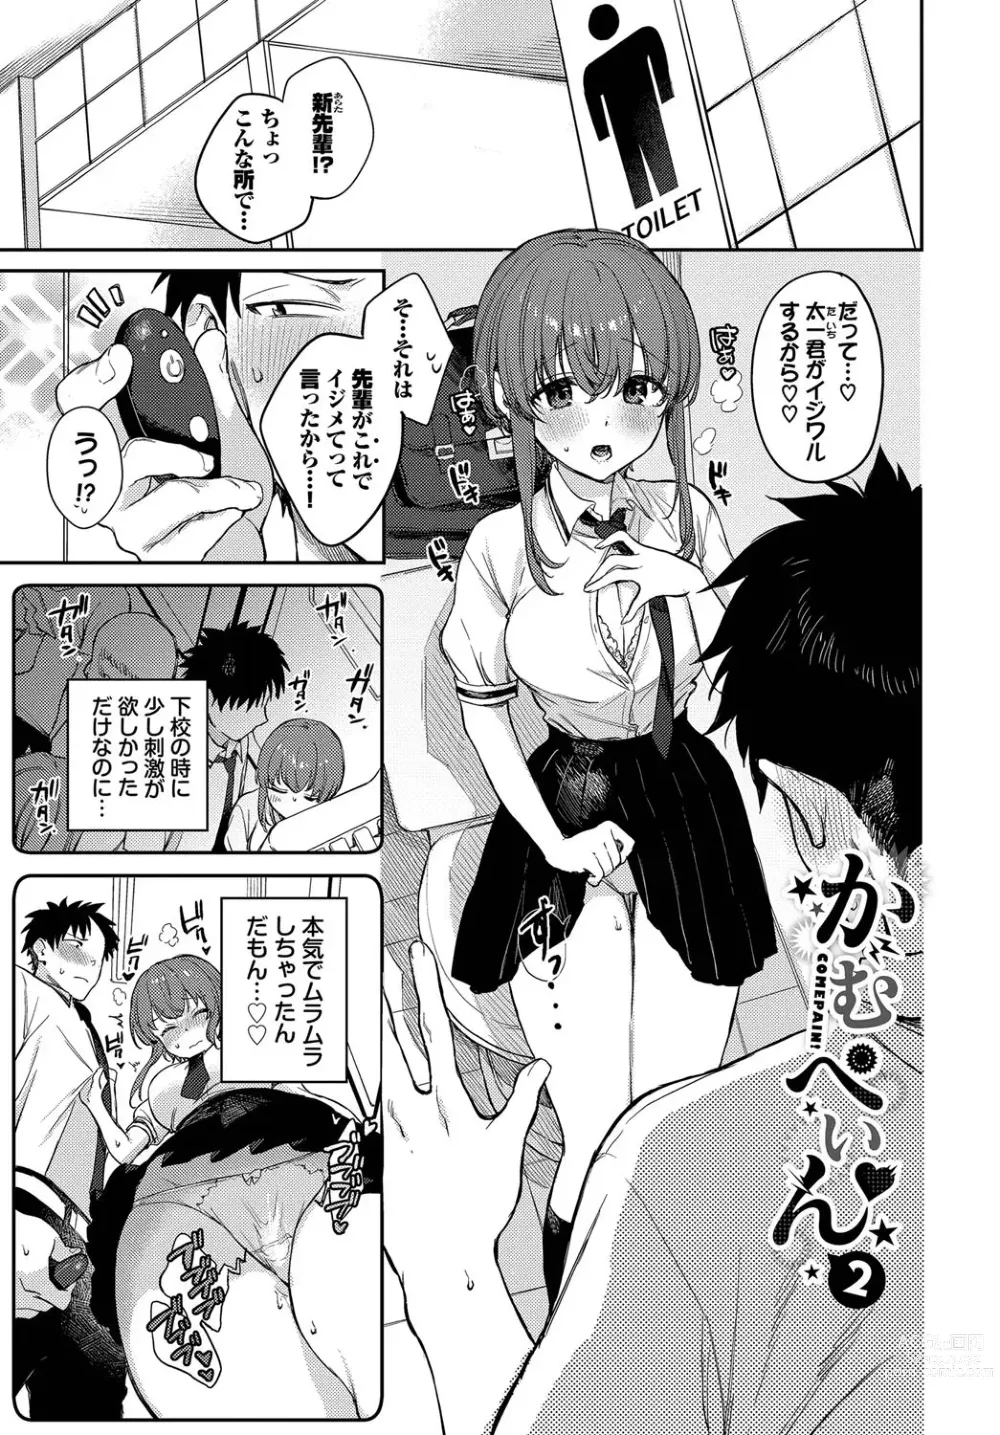 Page 202 of manga Mutsuri Bloom